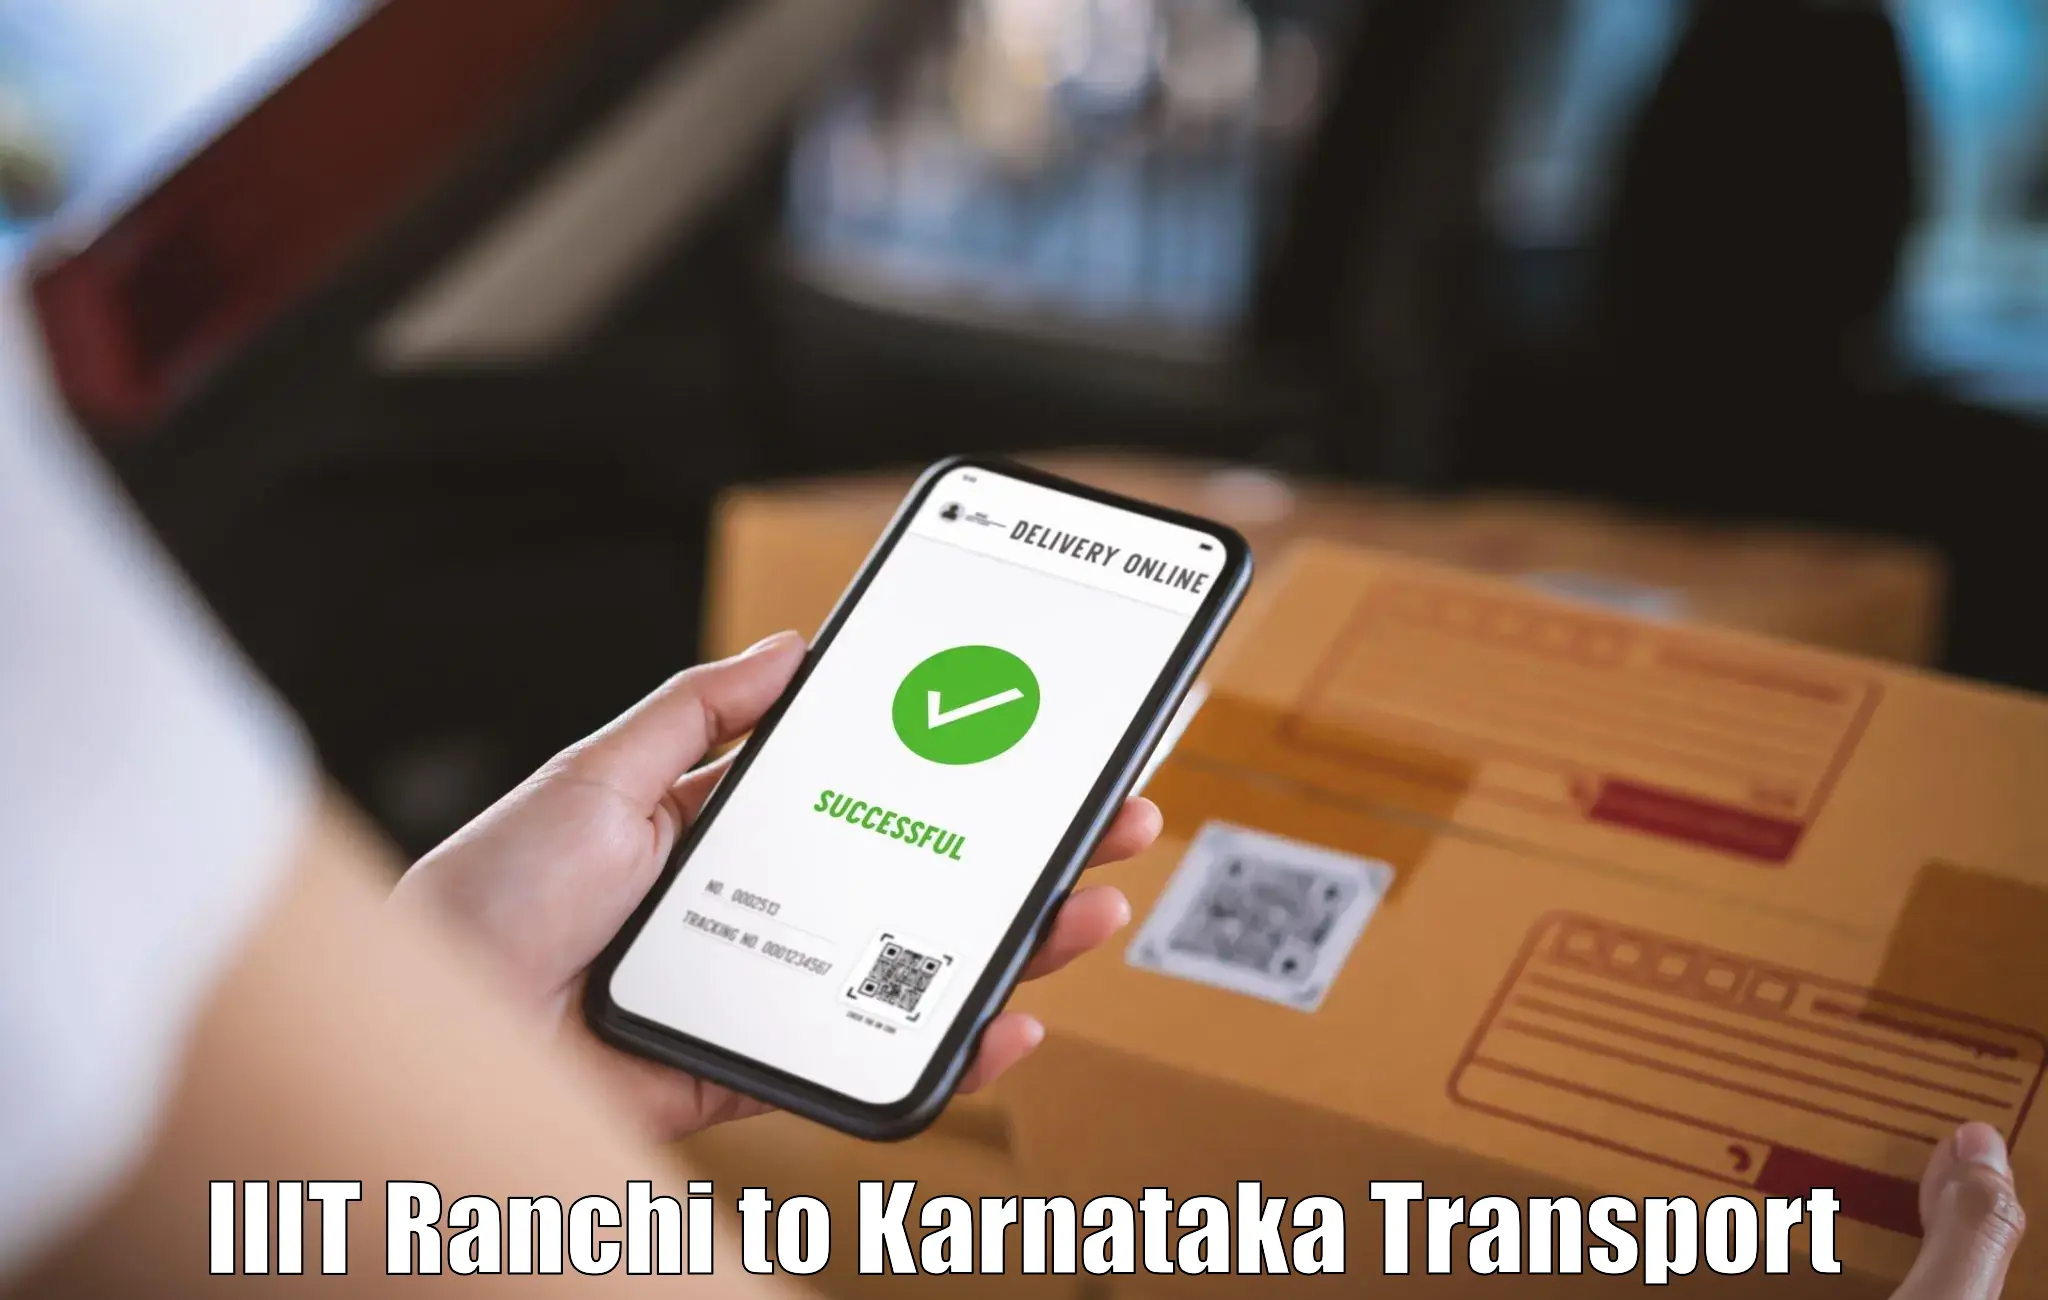 Express transport services IIIT Ranchi to Channarayapatna